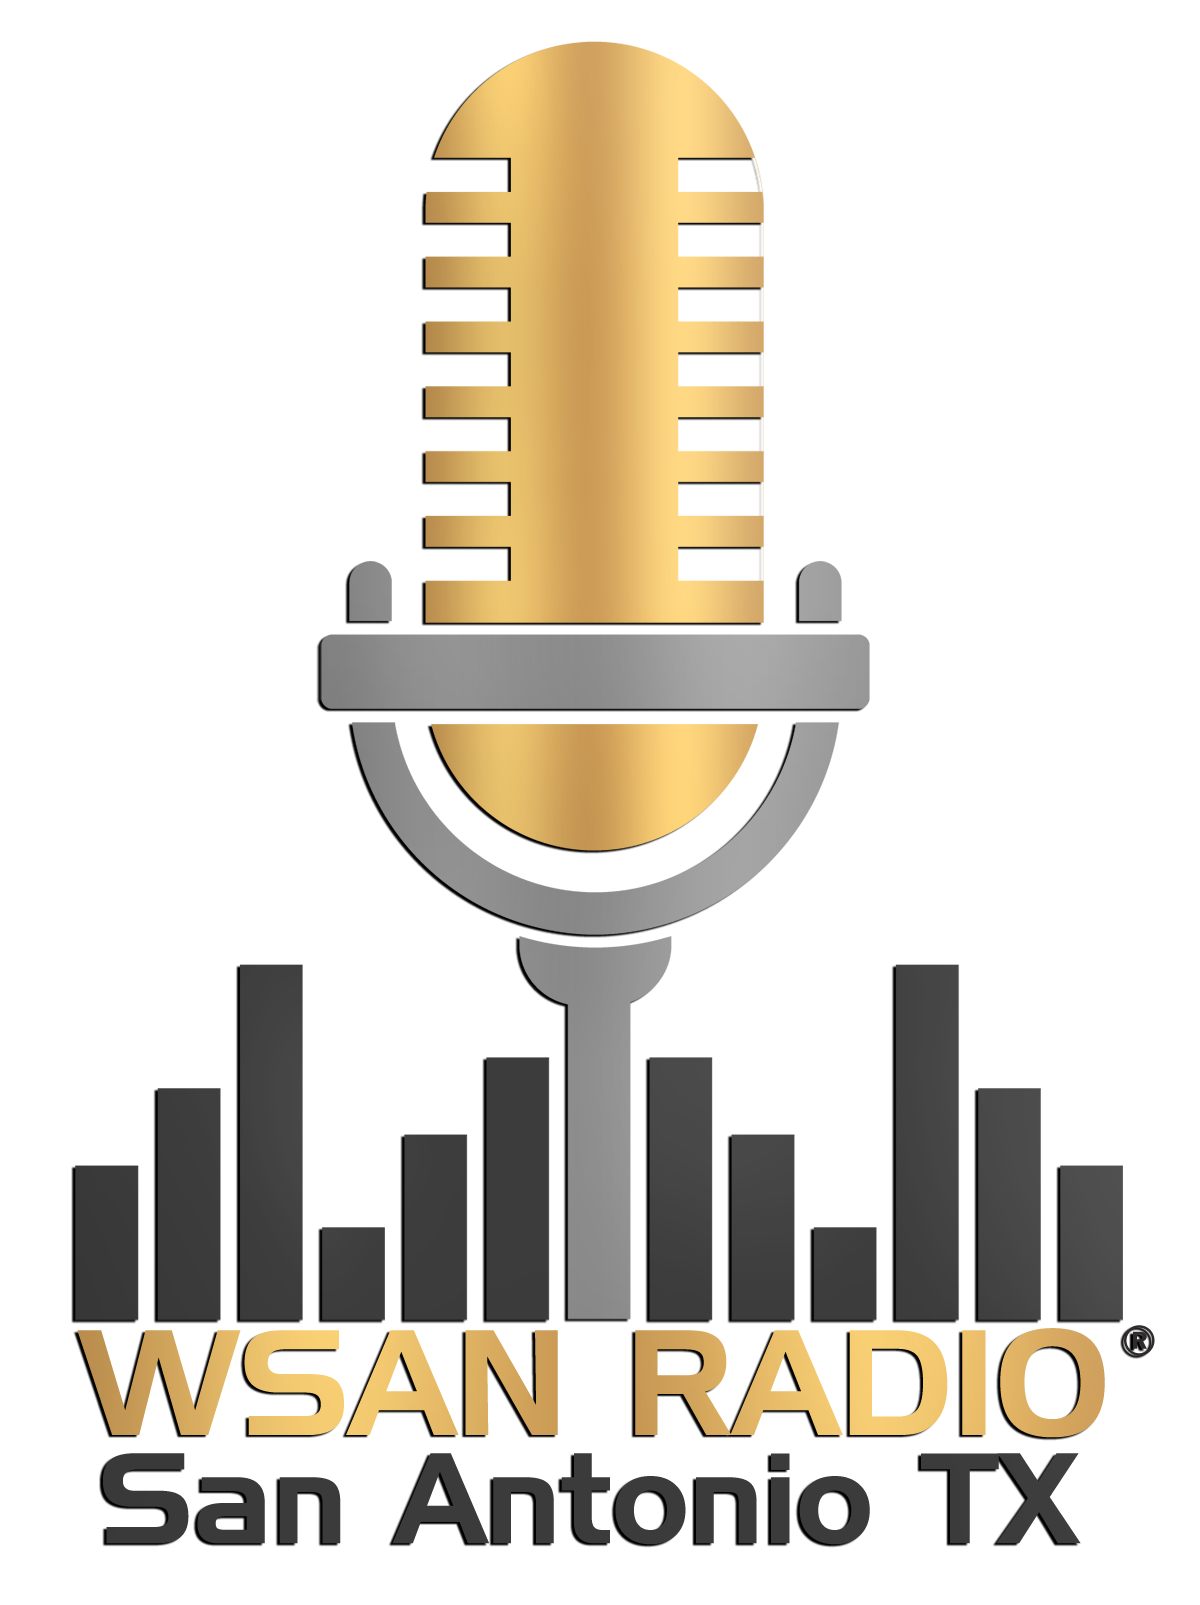 WSAN Radio